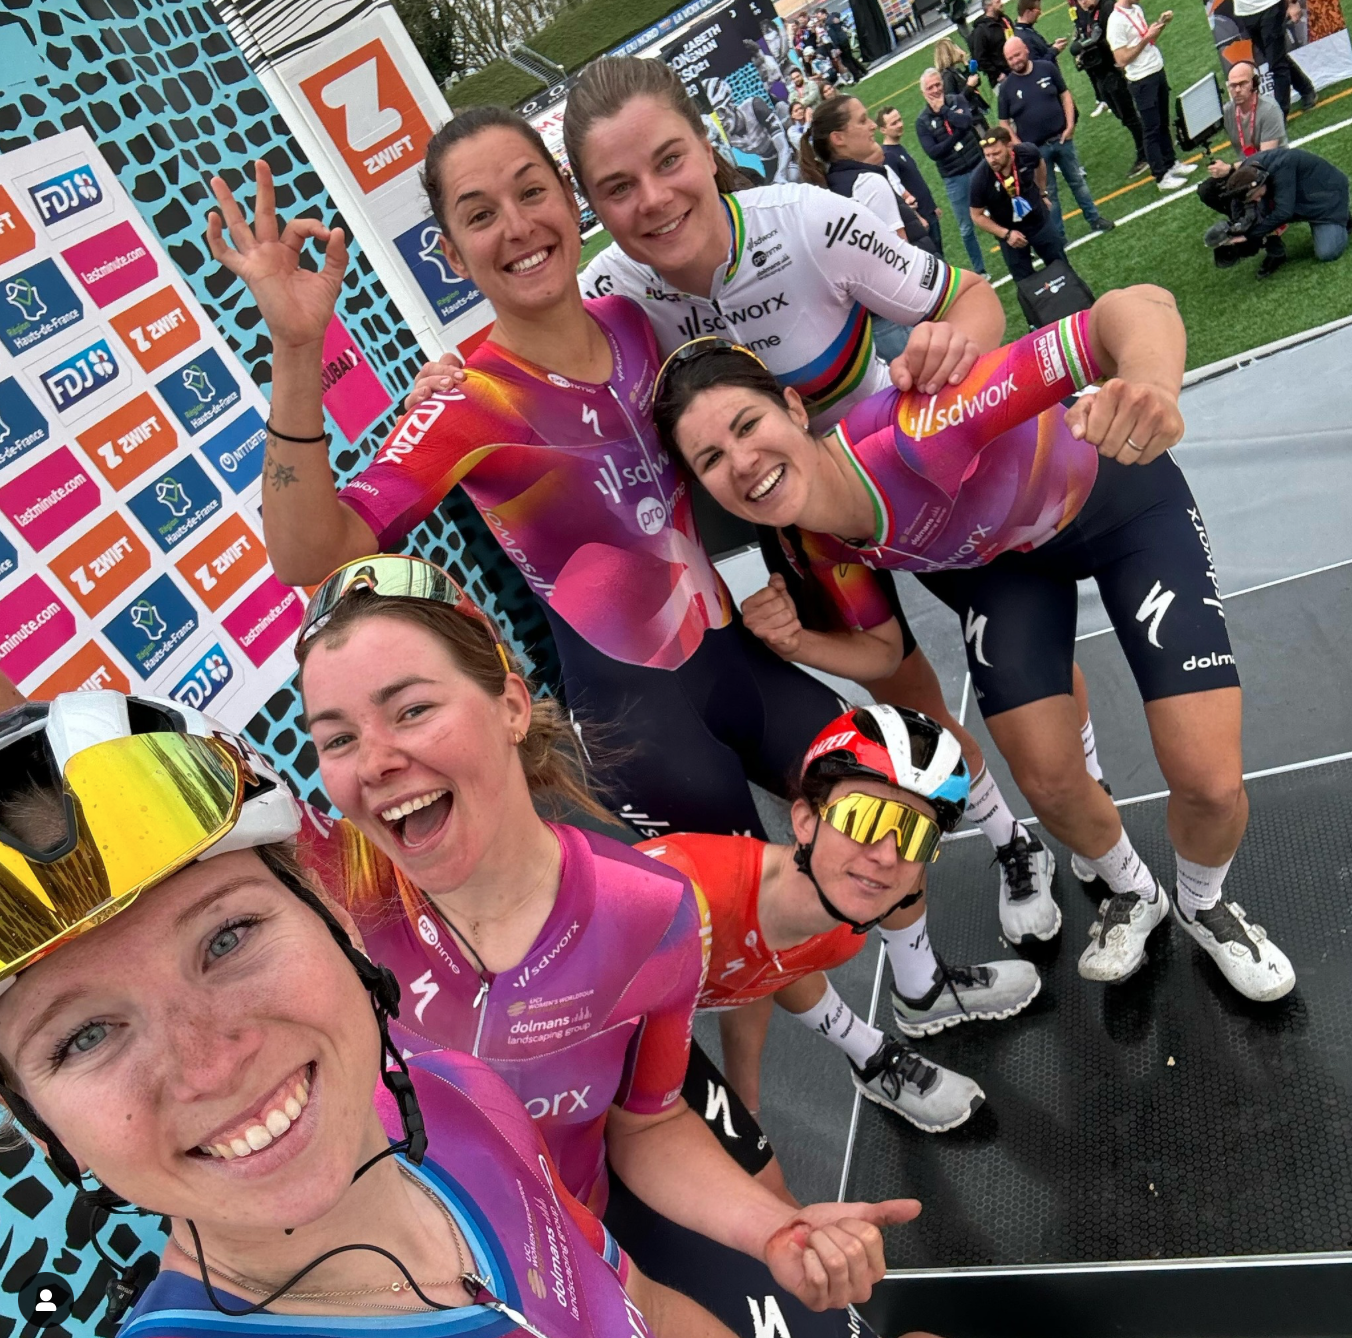 A team of women pose on a podium after winning a bike race